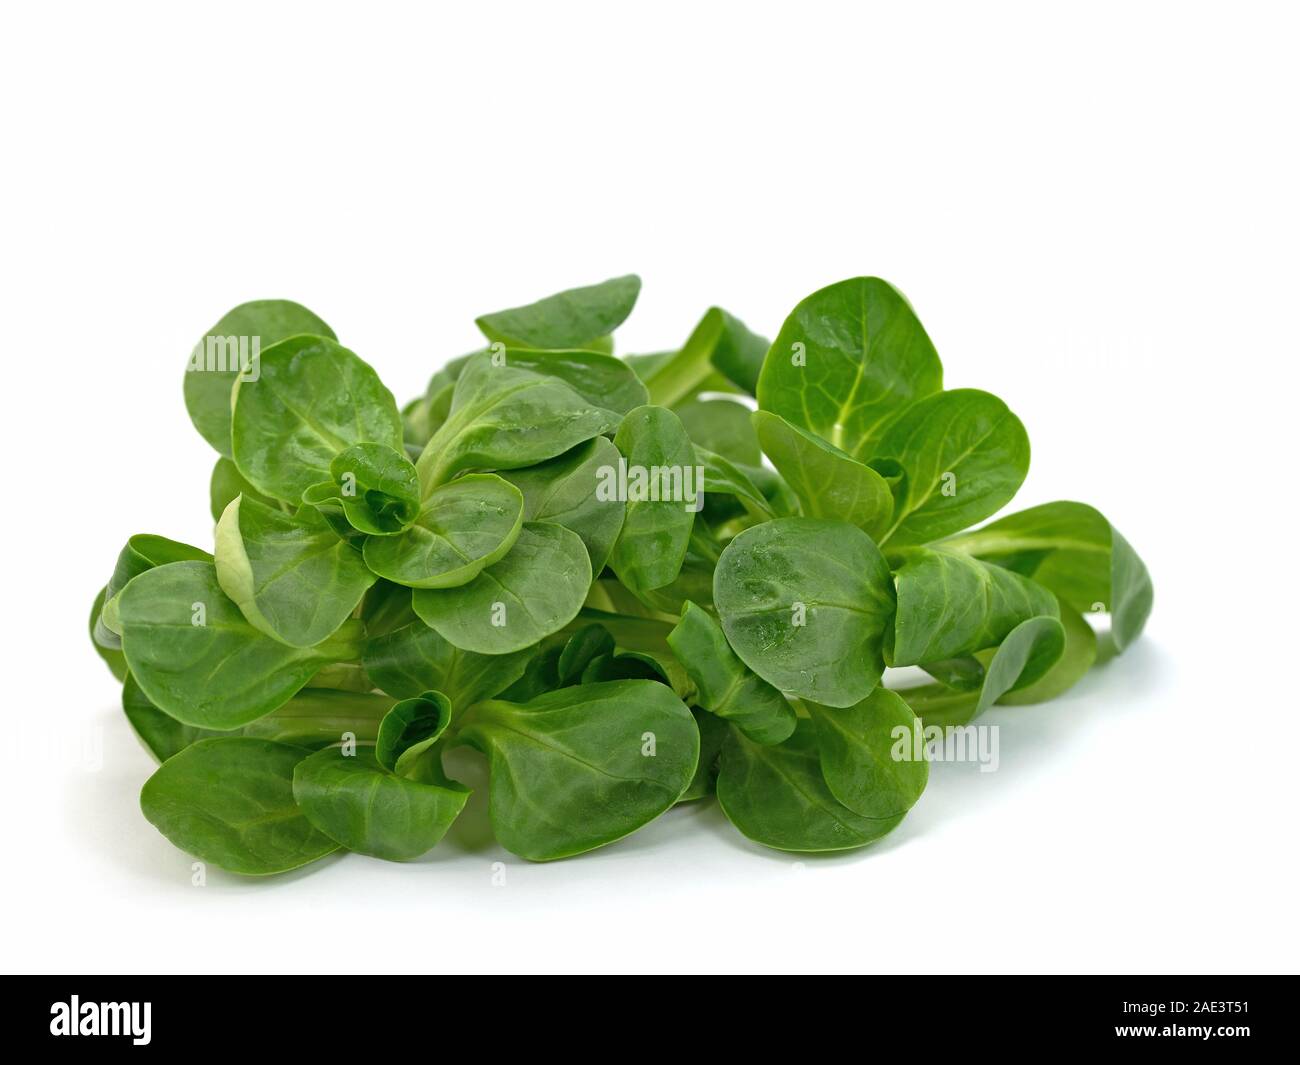 Lamb's lettuce, valerianella locusta, in front of white background Stock Photo